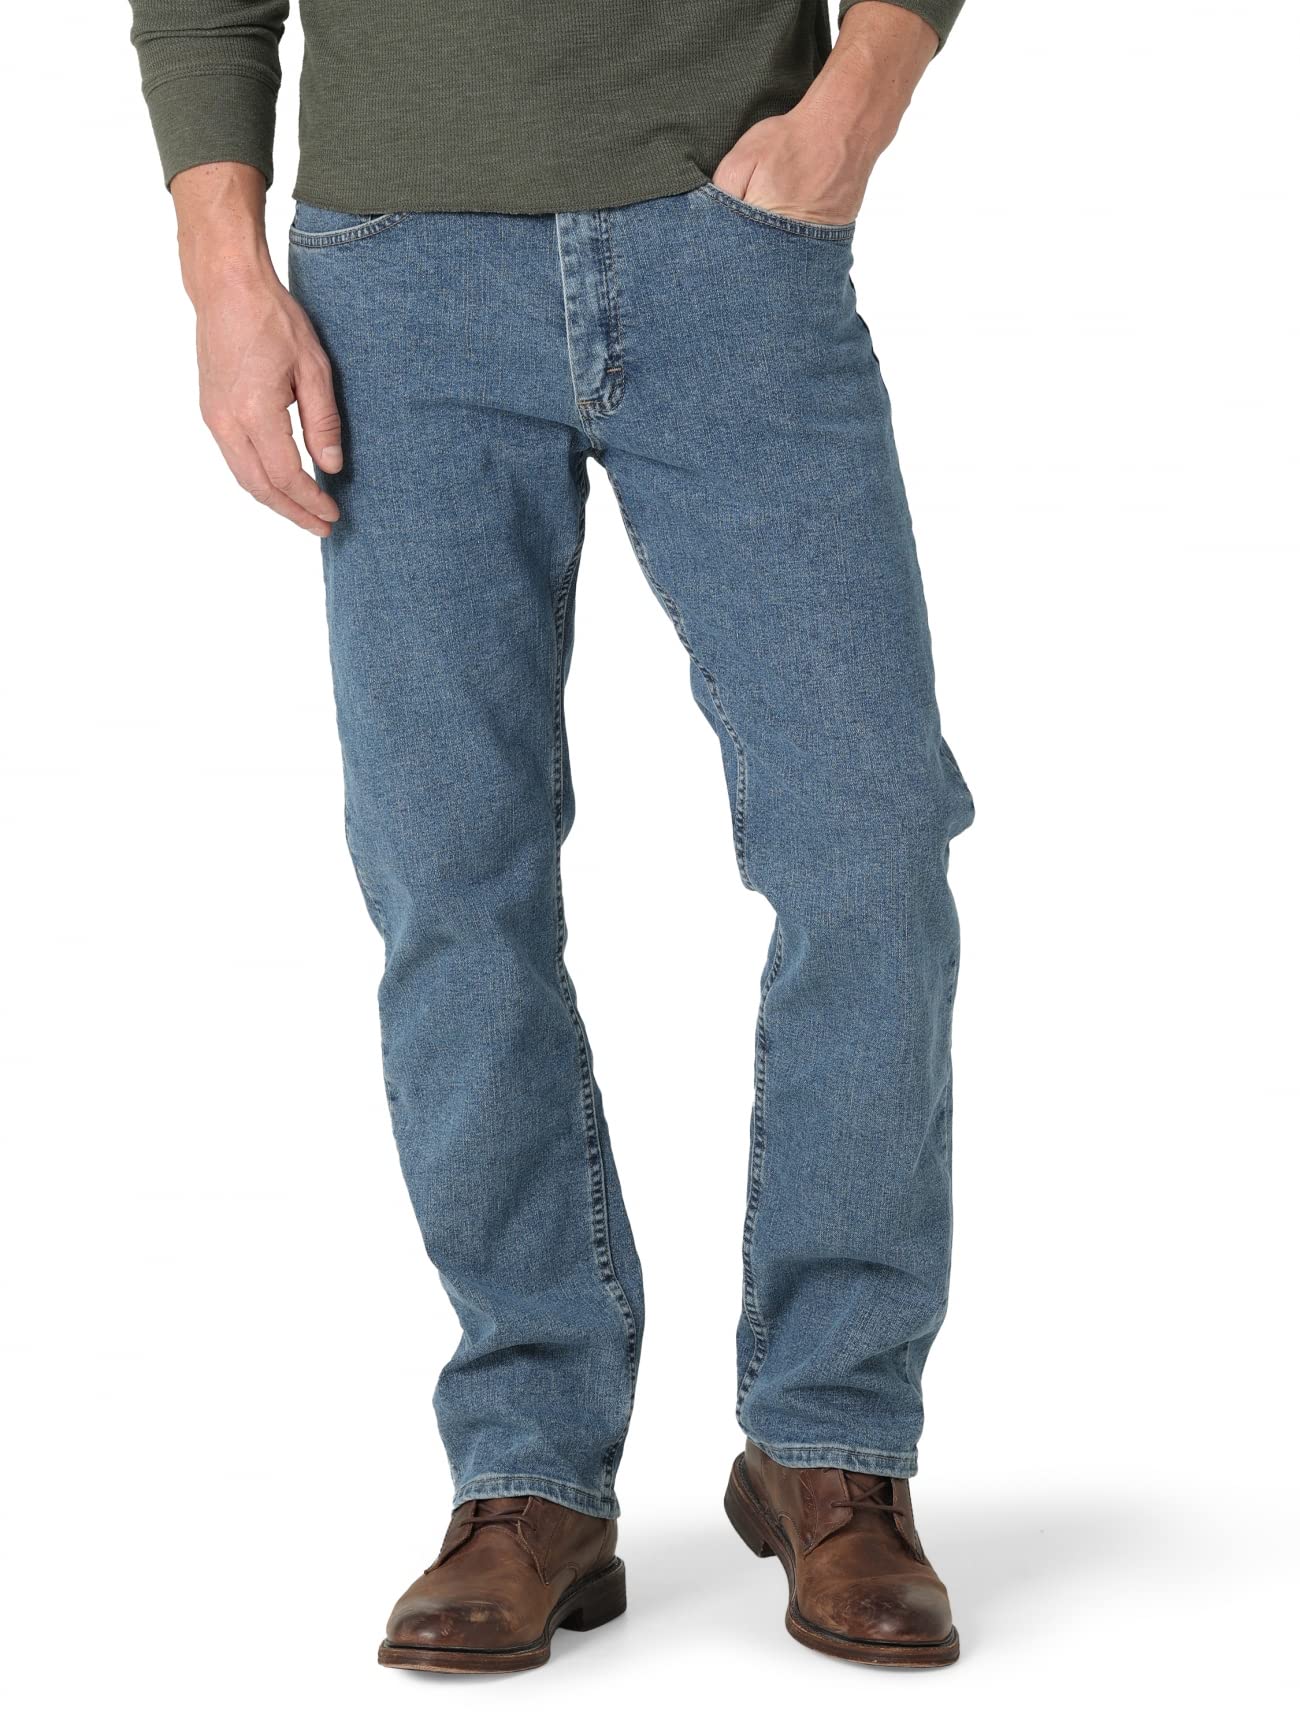 Wrangler Authentics Men's Regular Fit Comfort Flex Waist Jean, Light Stonewash, 31W x 30L